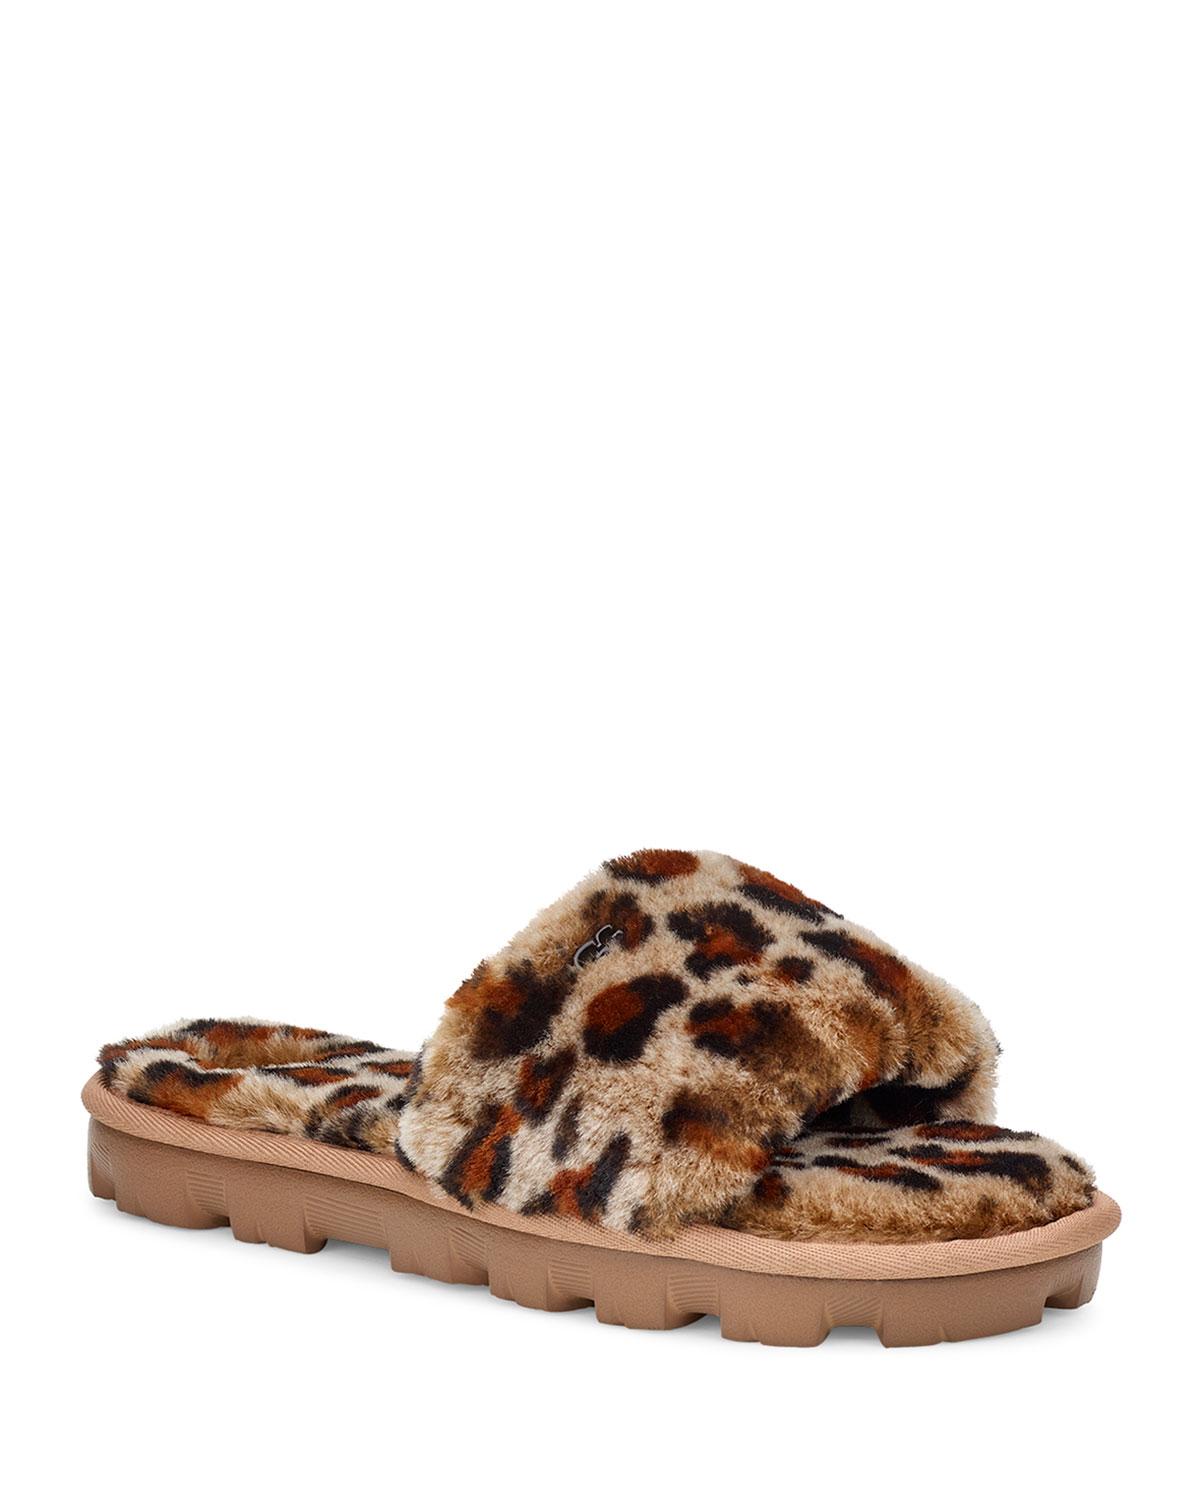 Cozette Leopard Slide Slippers